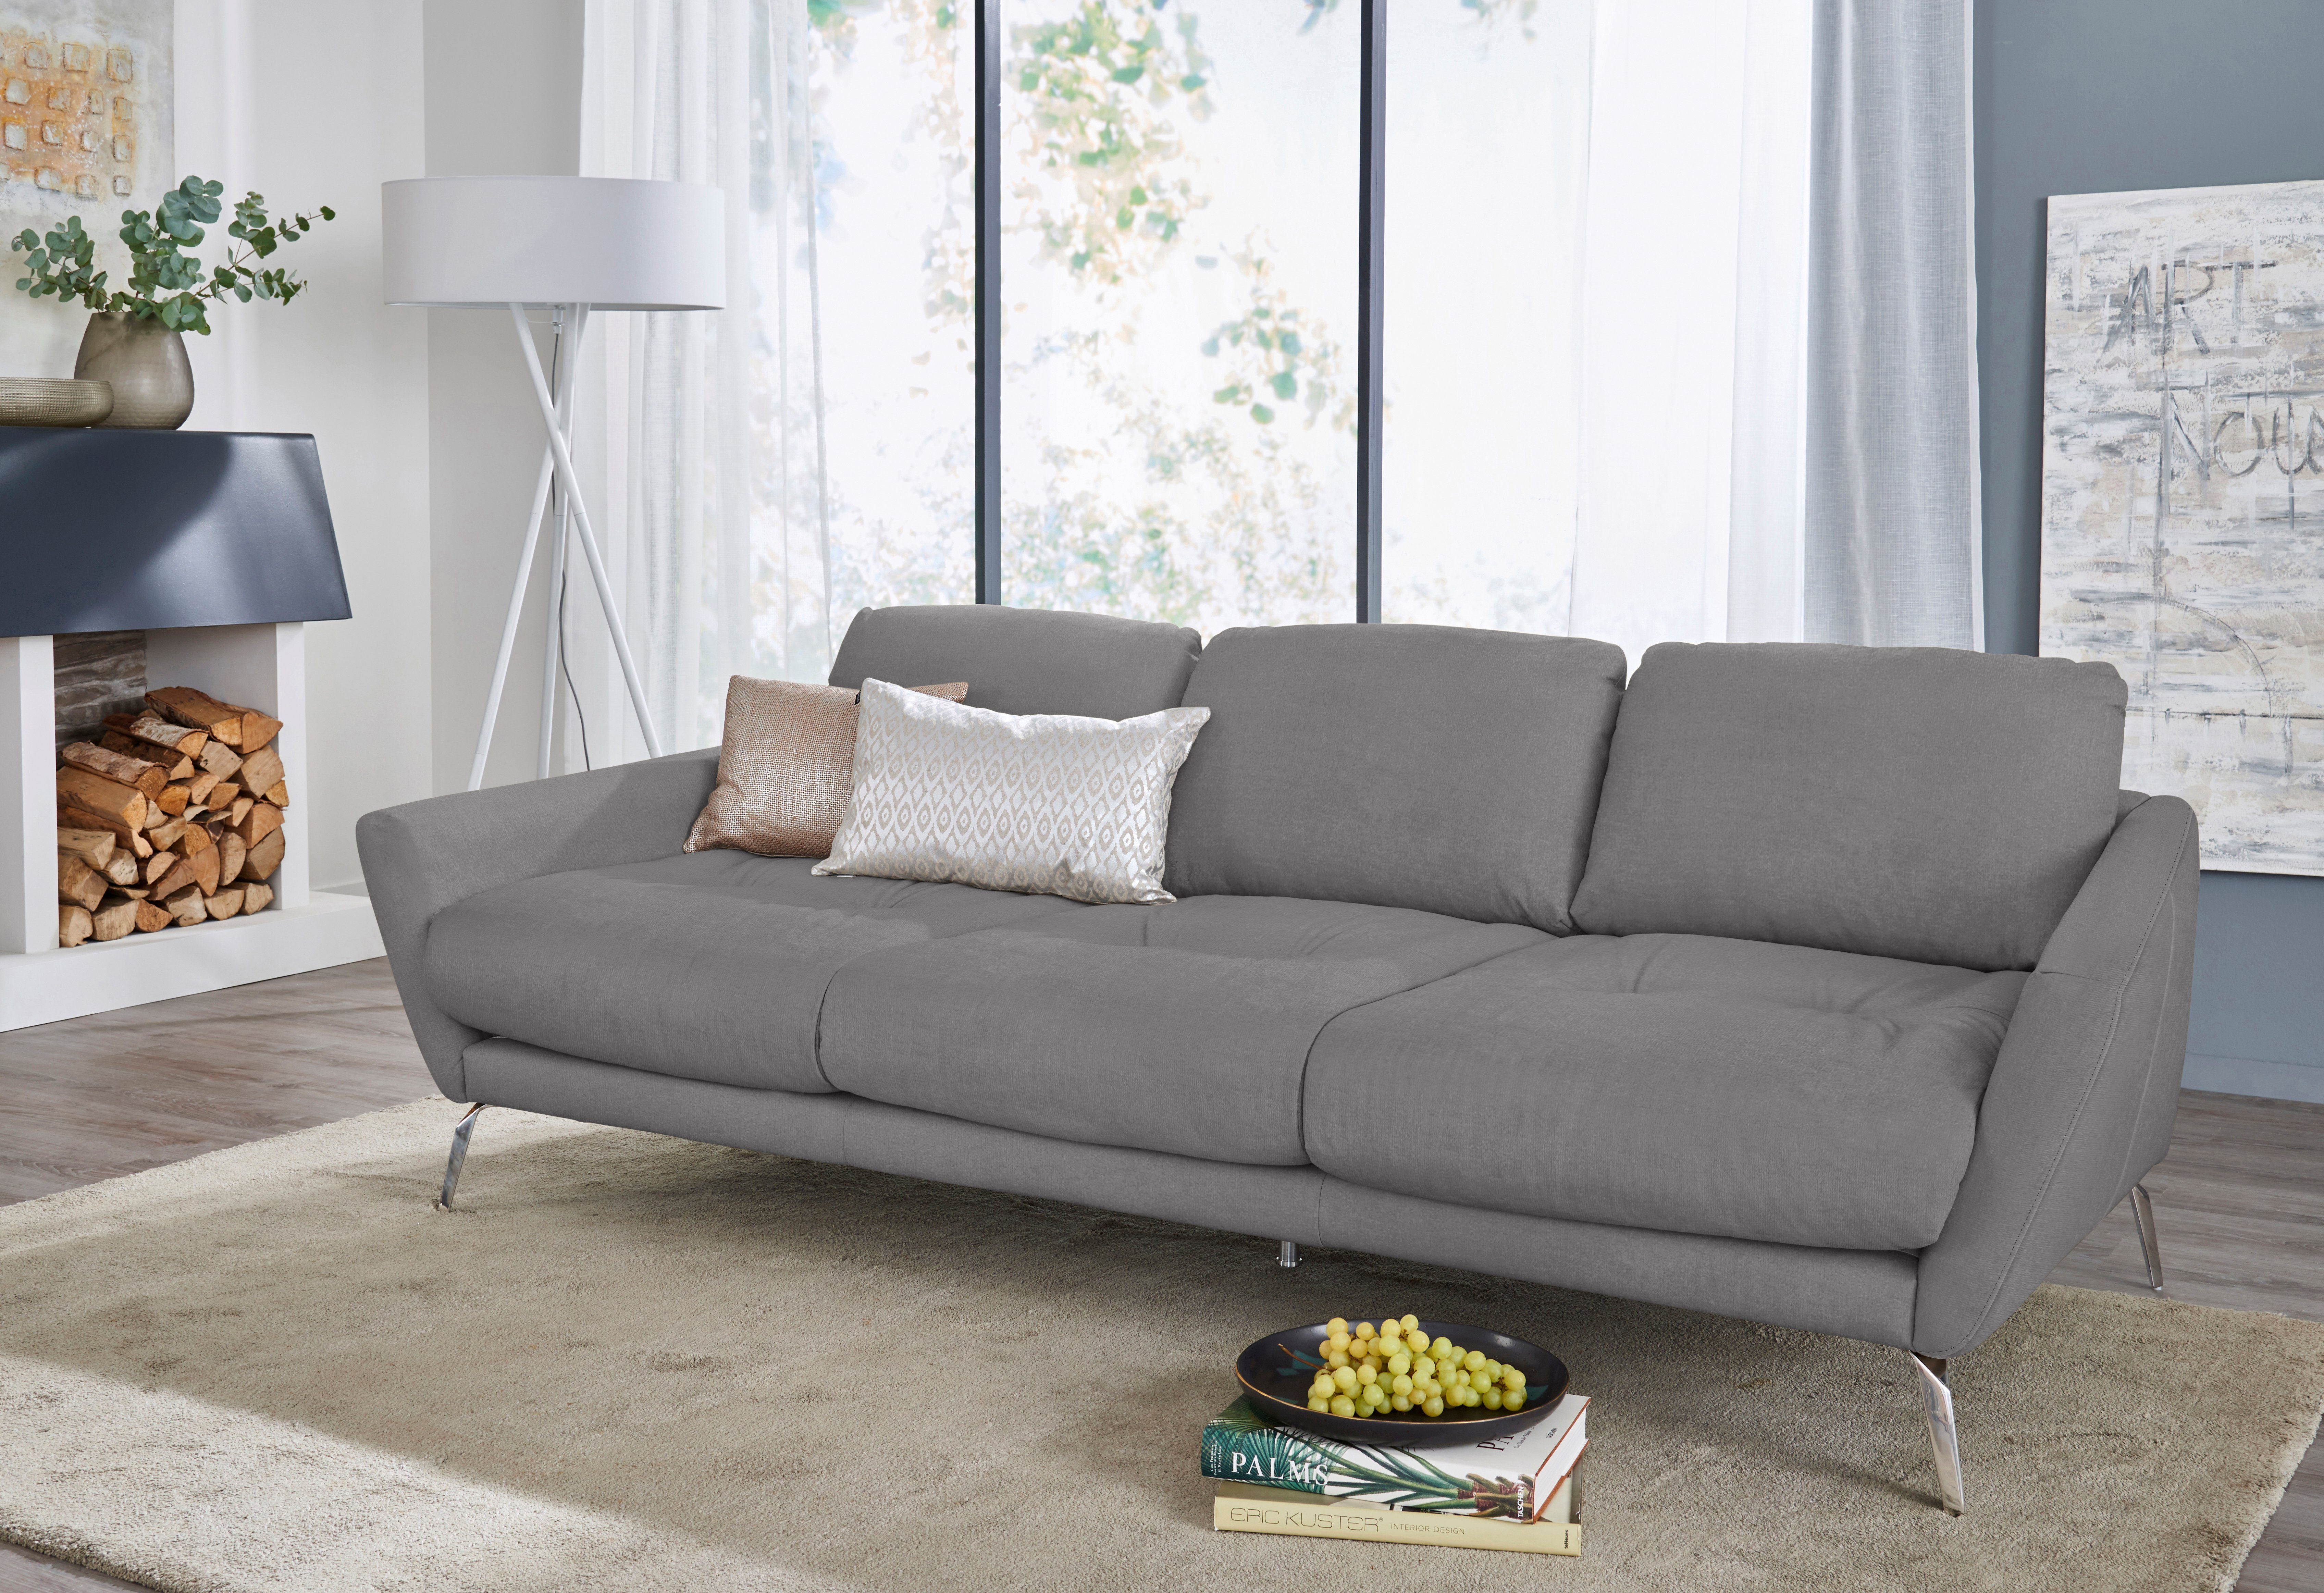 Chrom Heftung Sitz, softy, W.SCHILLIG glänzend Big-Sofa dekorativer mit im Füße